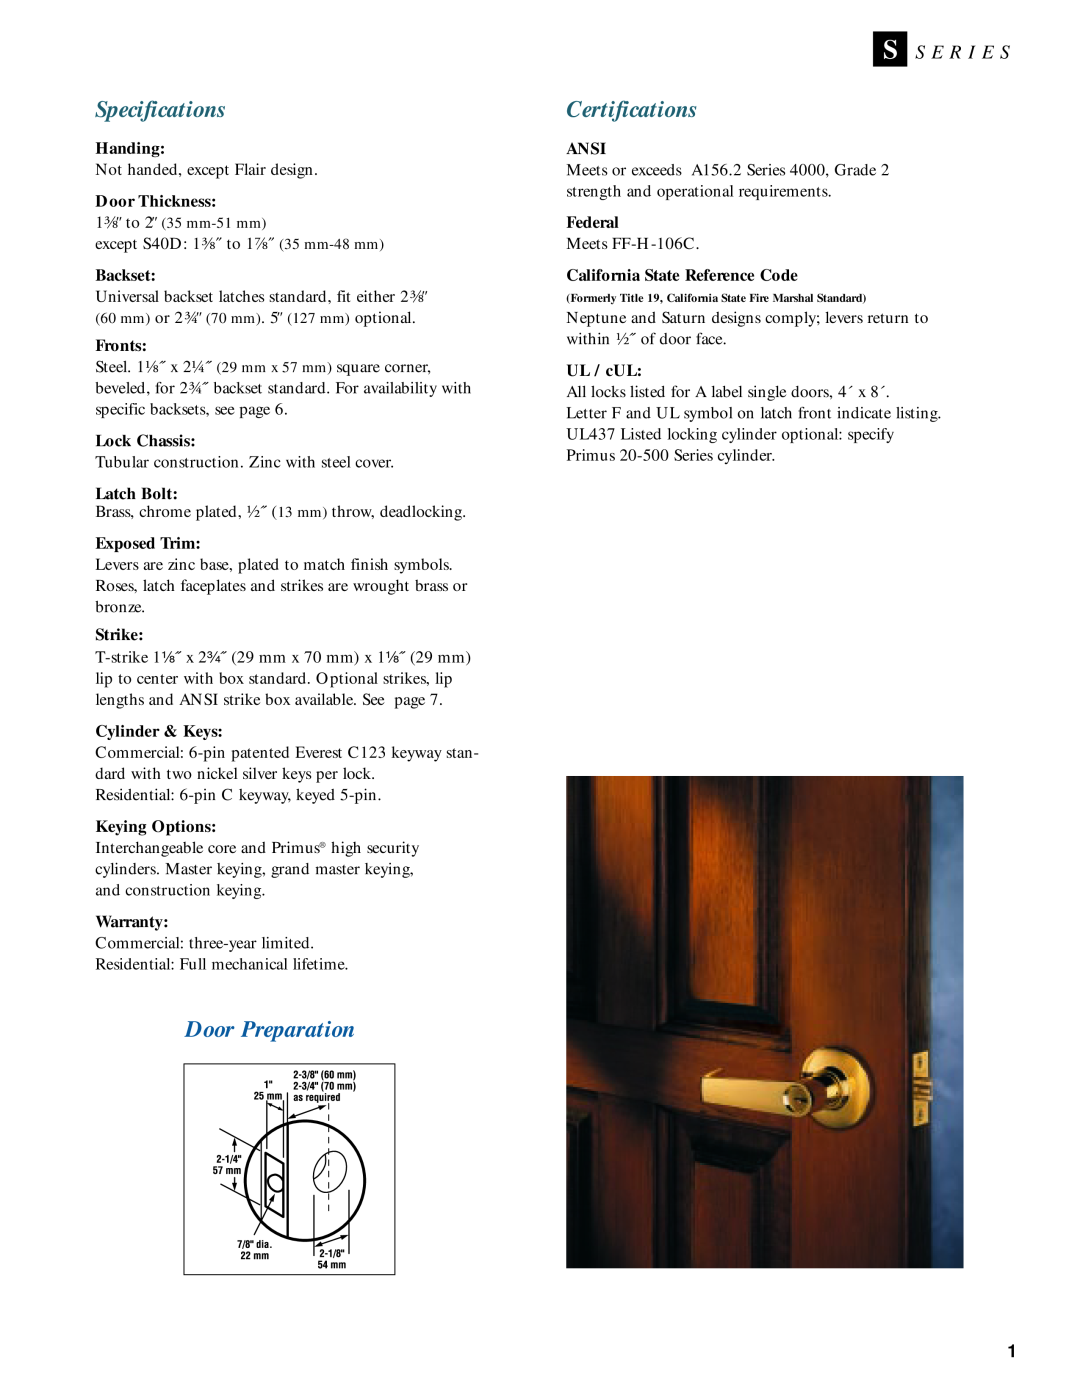 Schlage Door Locks manual Specifications, Door Preparation, Certifications, S S E R I E S 